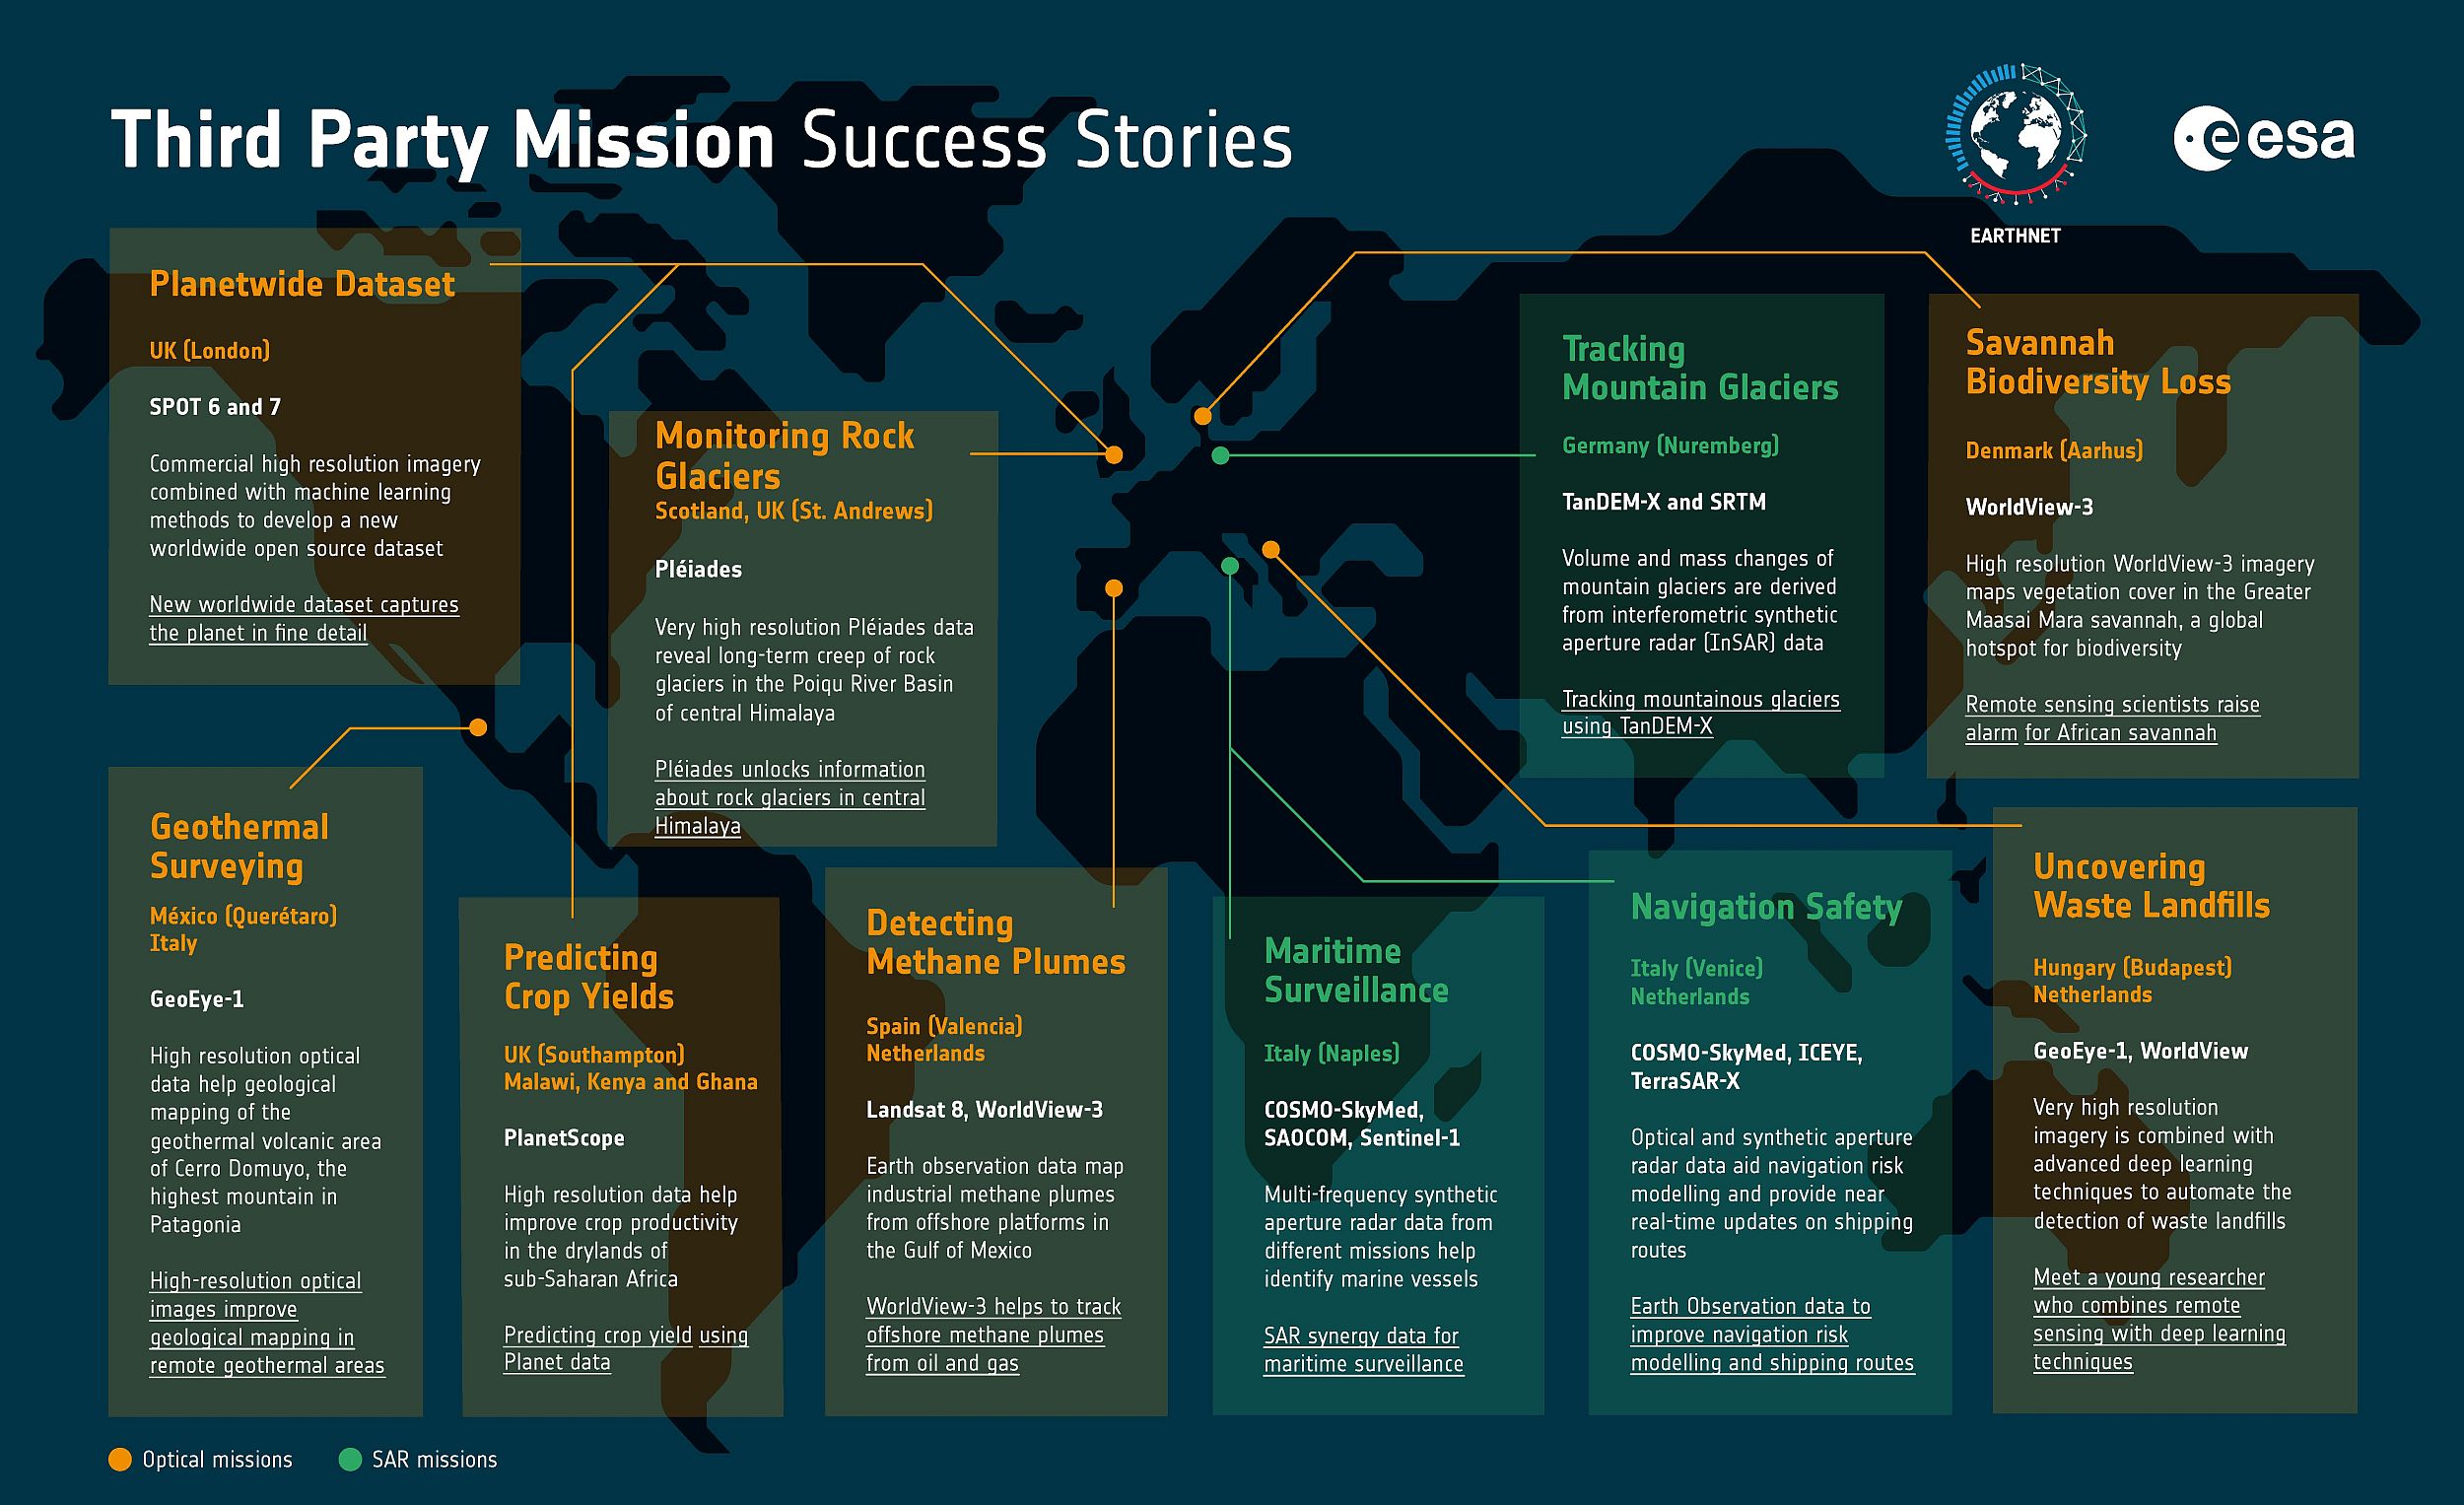 ESA's Third Party Mission success stories